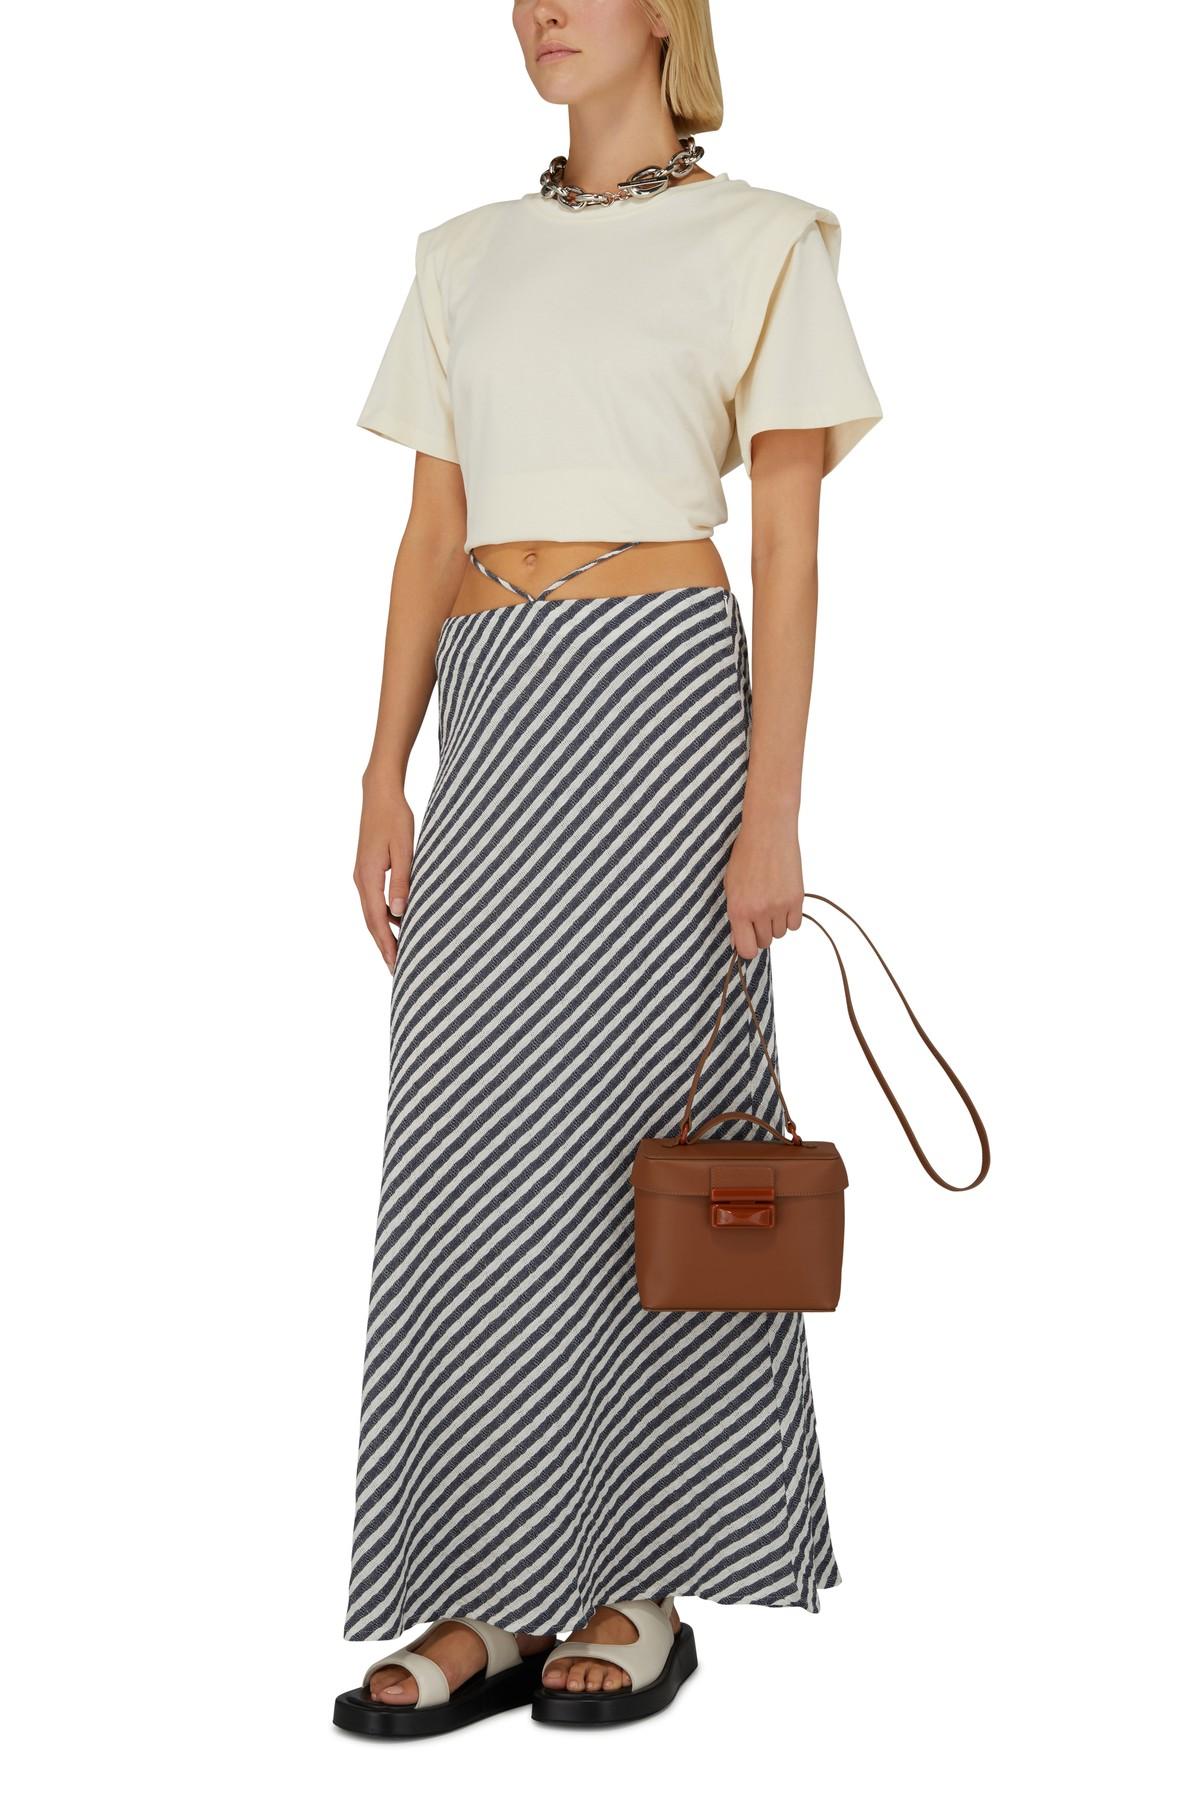 Musier Paris Tihilia Long Skirt in Gray | Lyst